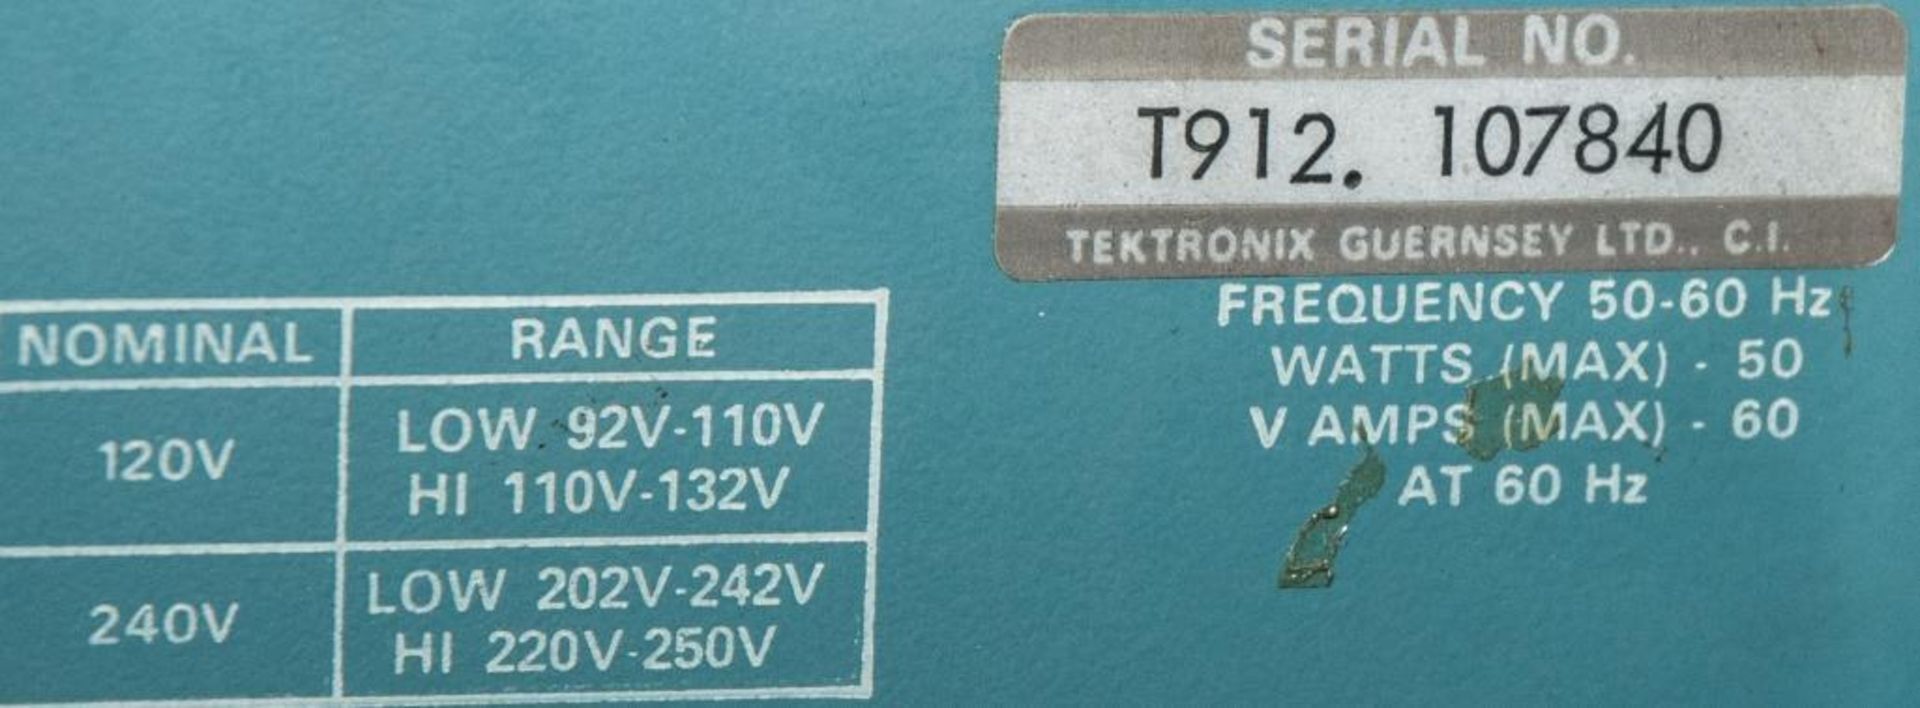 Oscilloscope Tektronix T912 Serial#T912.107840 10mhz Storage, On Tektronix 210-2 Type D Cart - Image 3 of 3